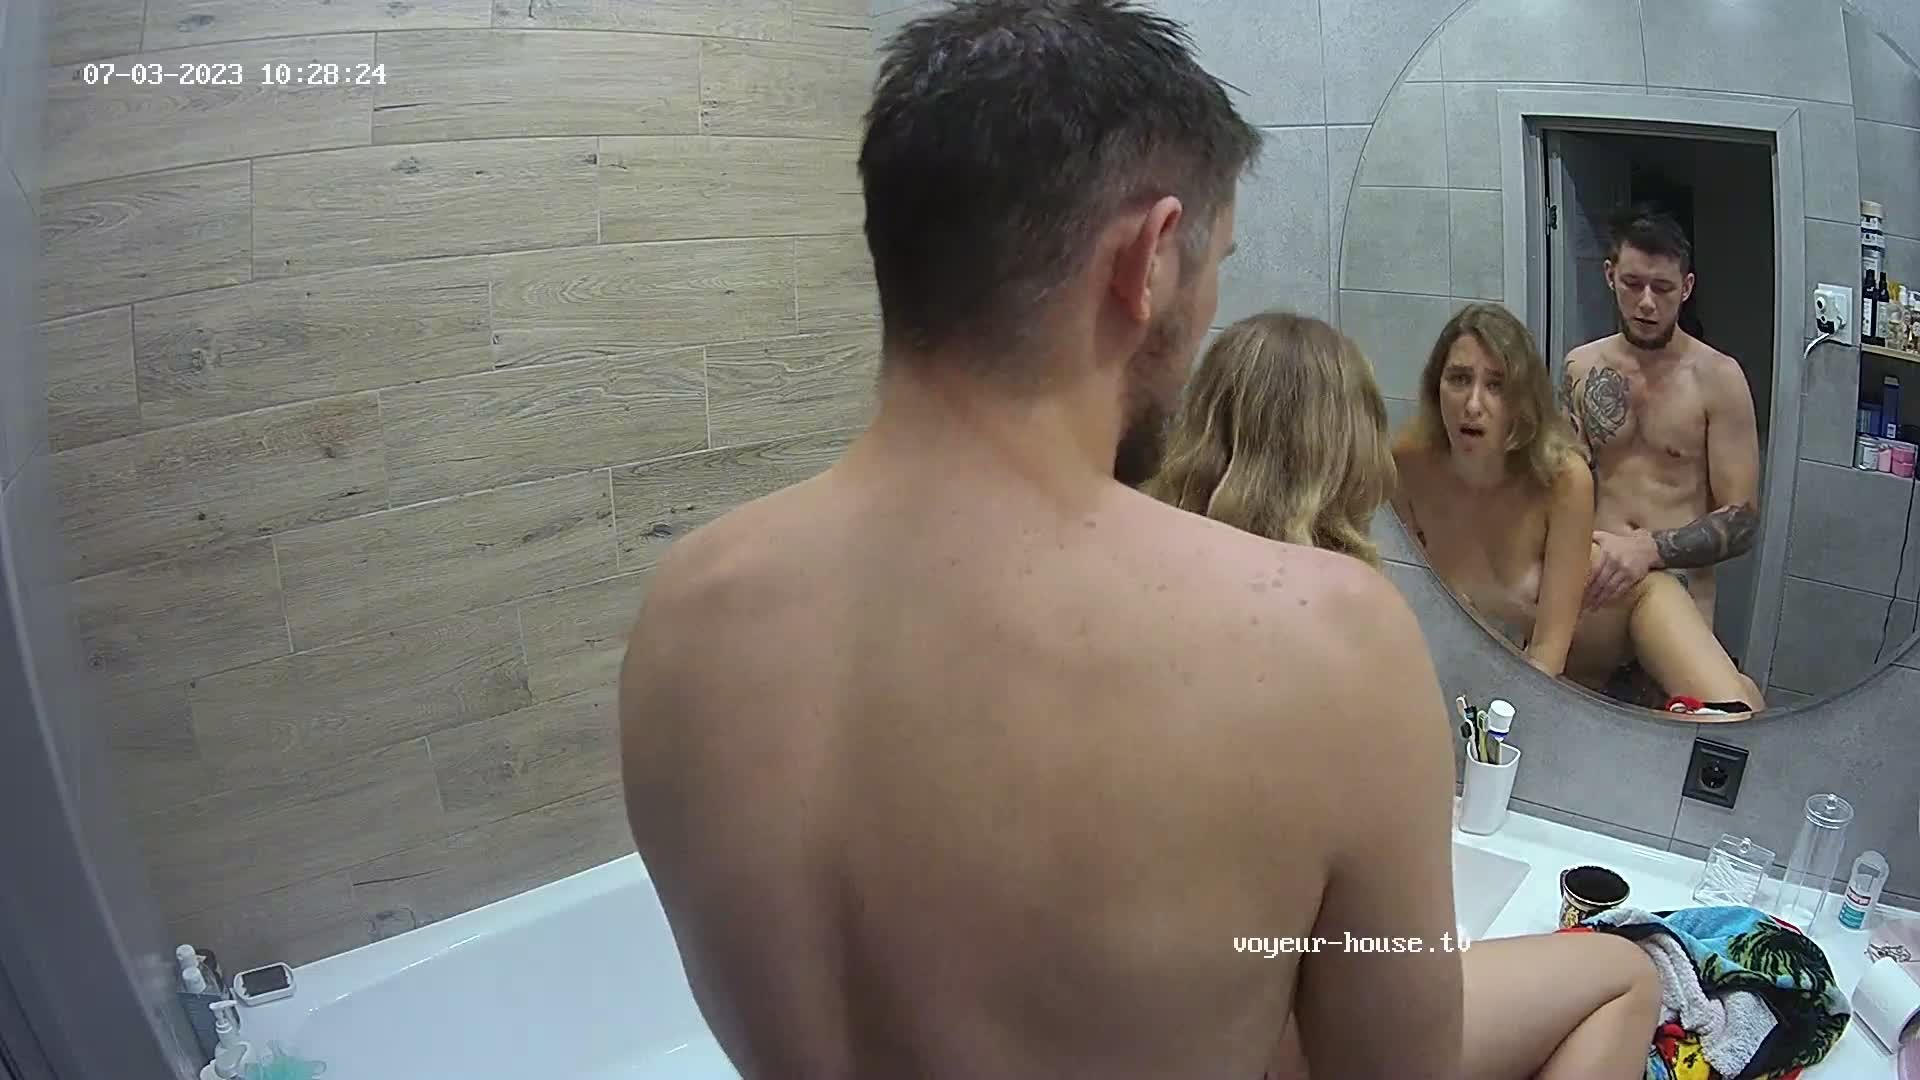 Telma & Arnold bathroom sex, Jul-03-2023